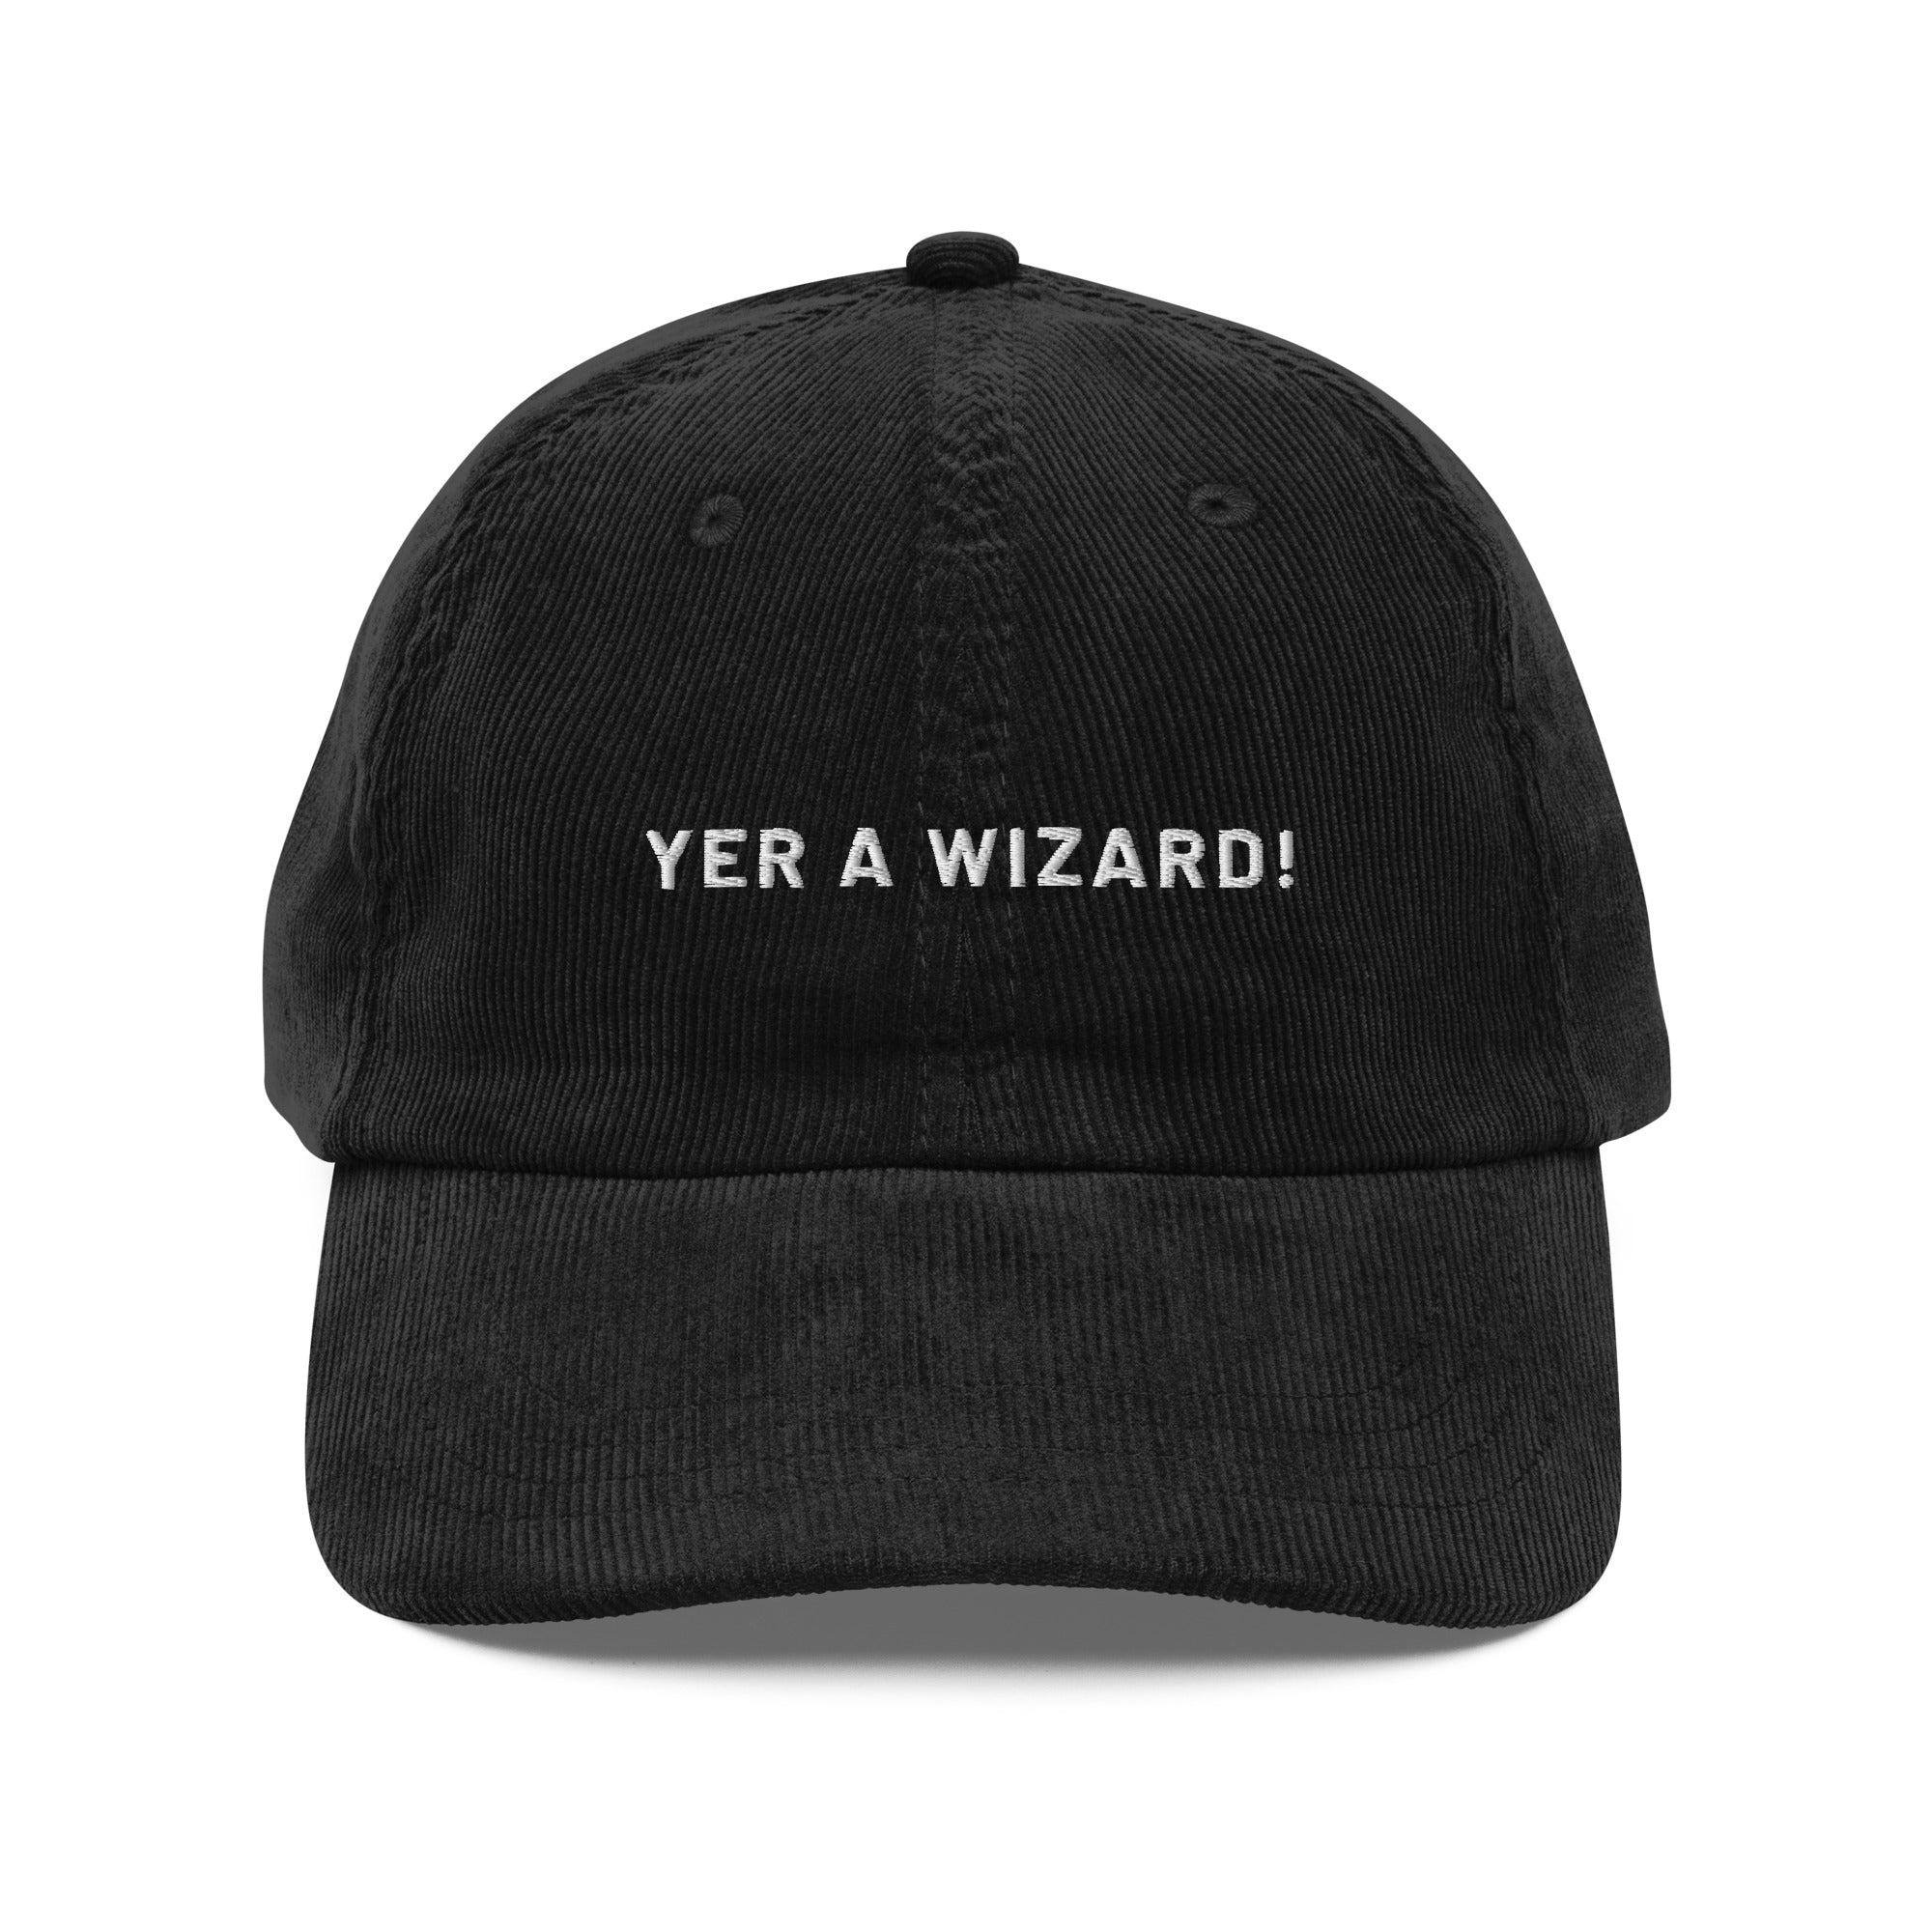 Yer a wizard!